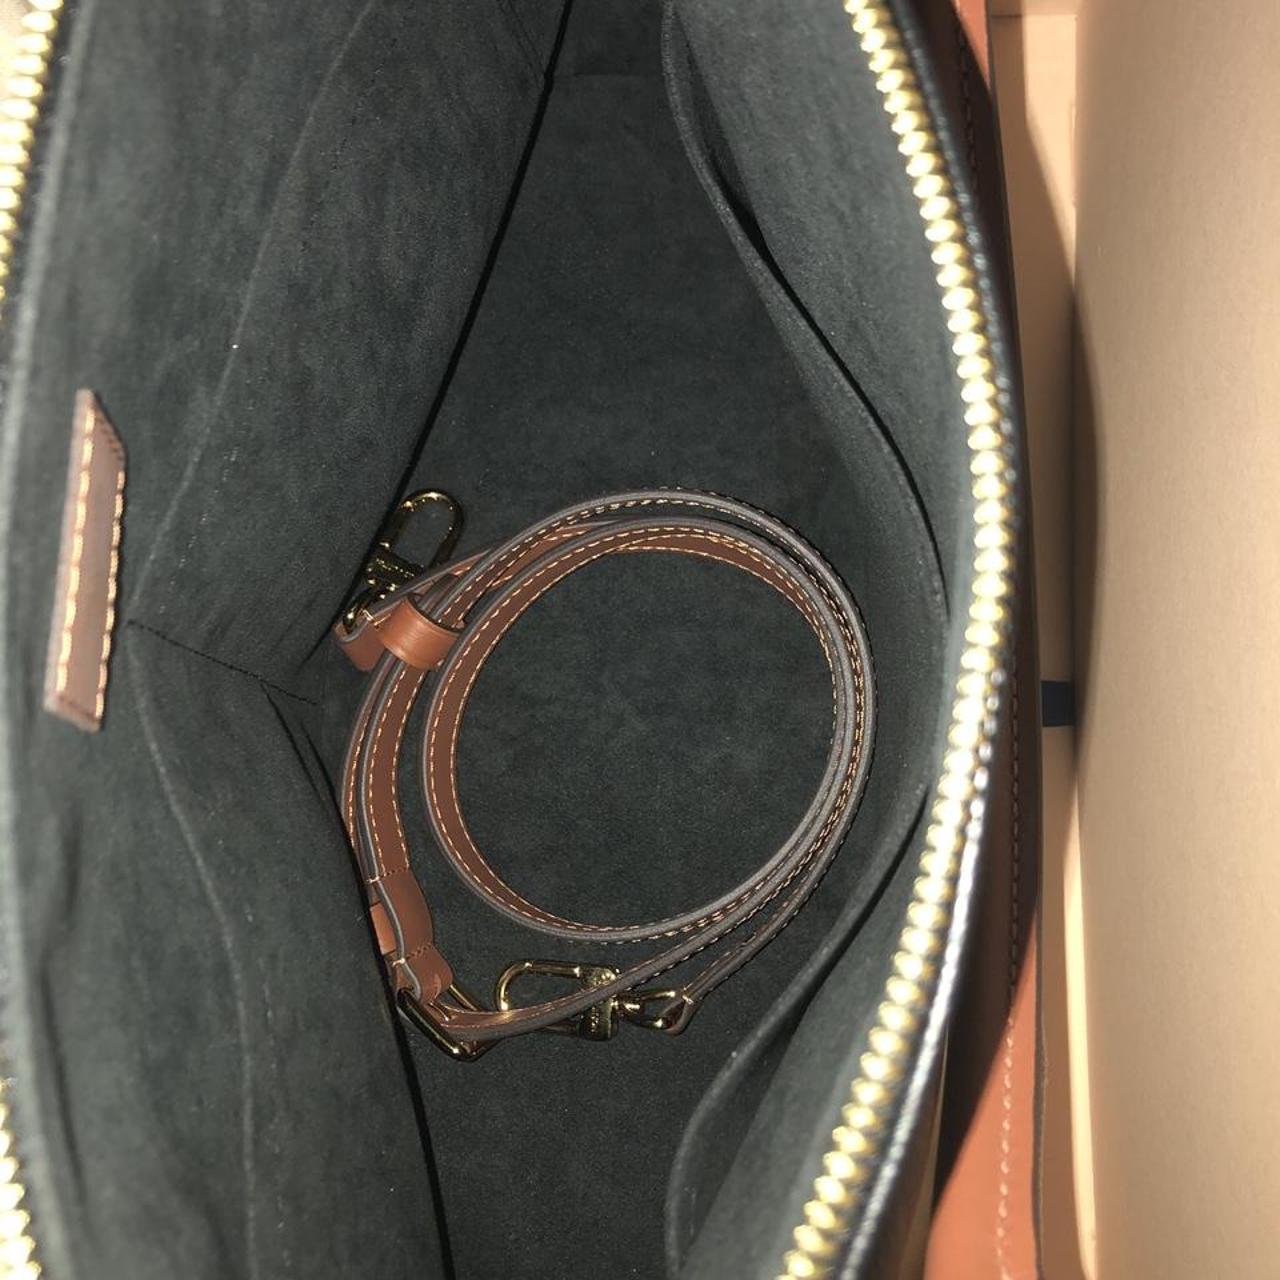 Louis Vuitton Tote W Handbag 339231